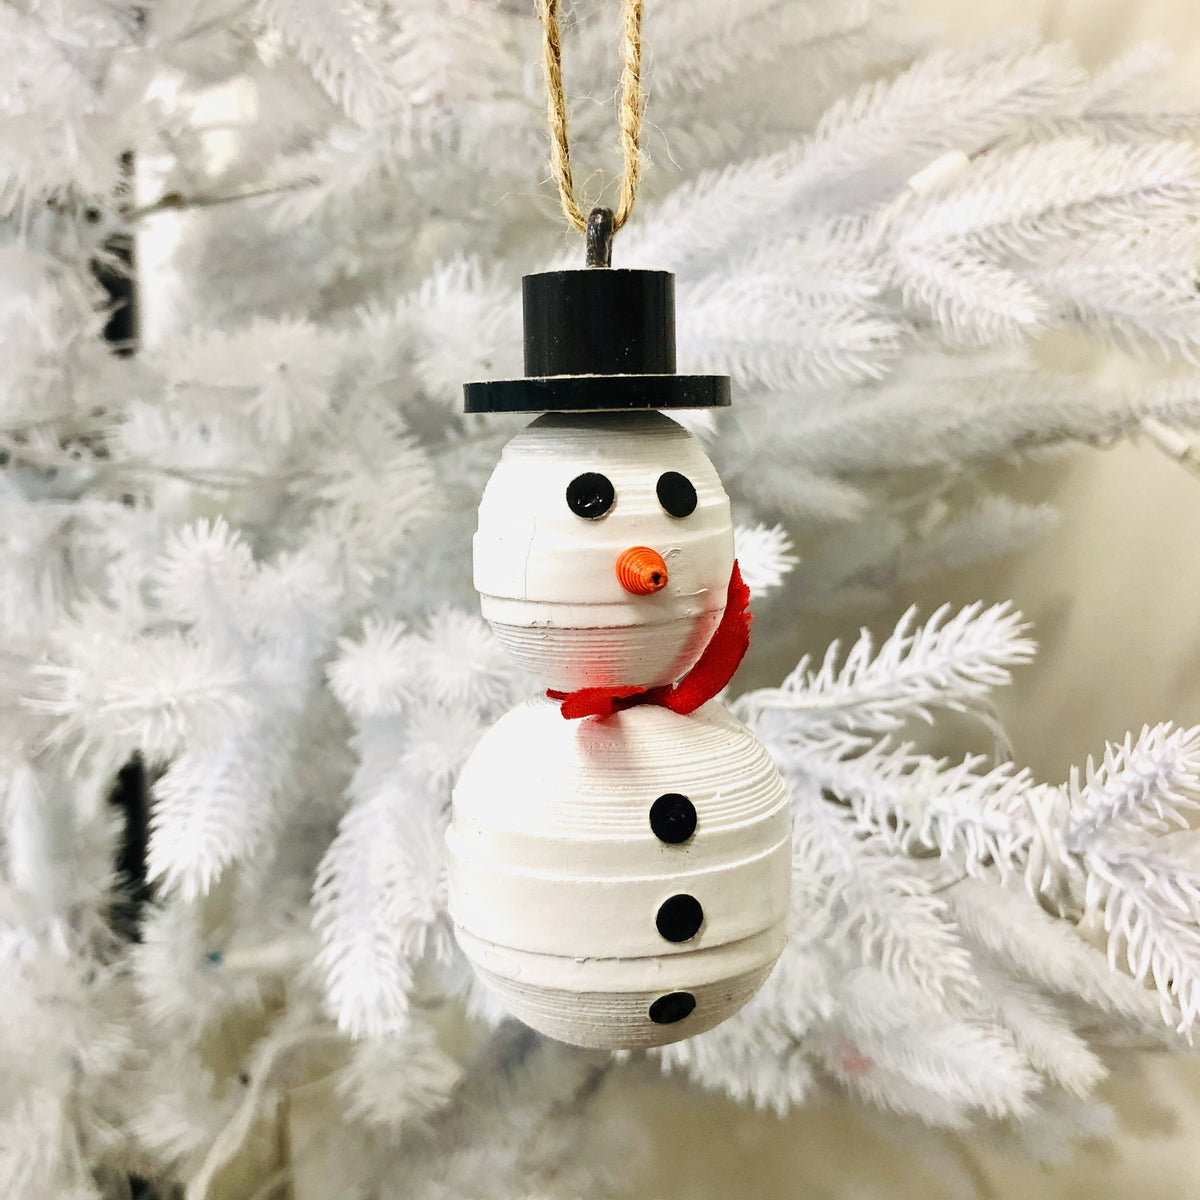 Homemade Snowman Ornament